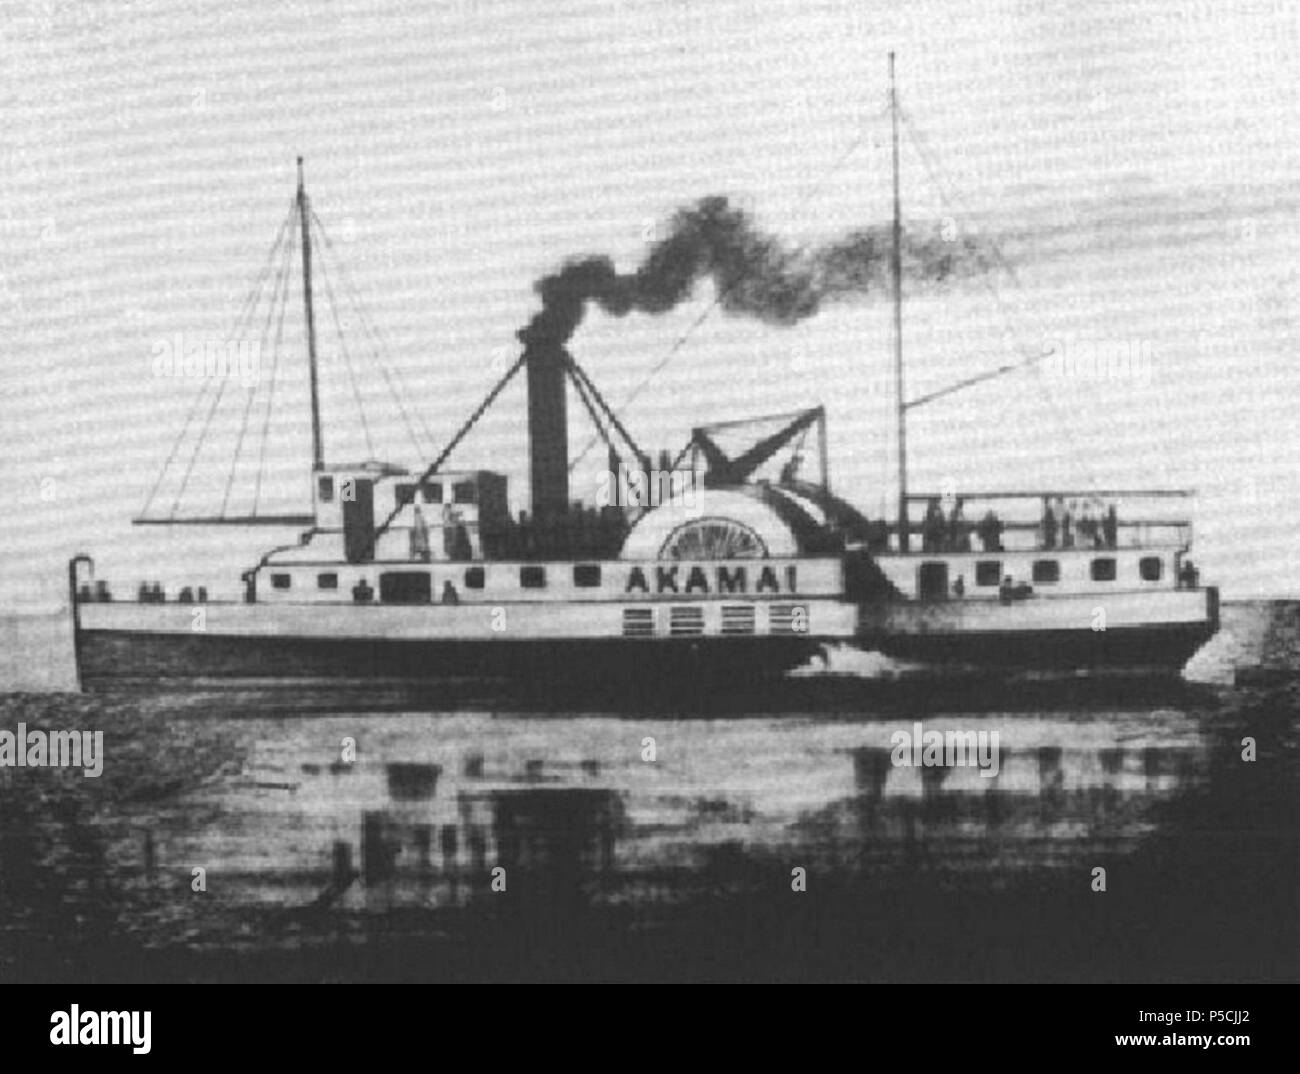 N/A. Inglés: El barco de vapor de Akamai. Noviembre 14, 1853 La llegada de  106 pies de largo, 114-ton American sidewheeler vaporera S.B. Wheeler, bajo  GUS ELLIS; renombrado Akamai, el primer buque